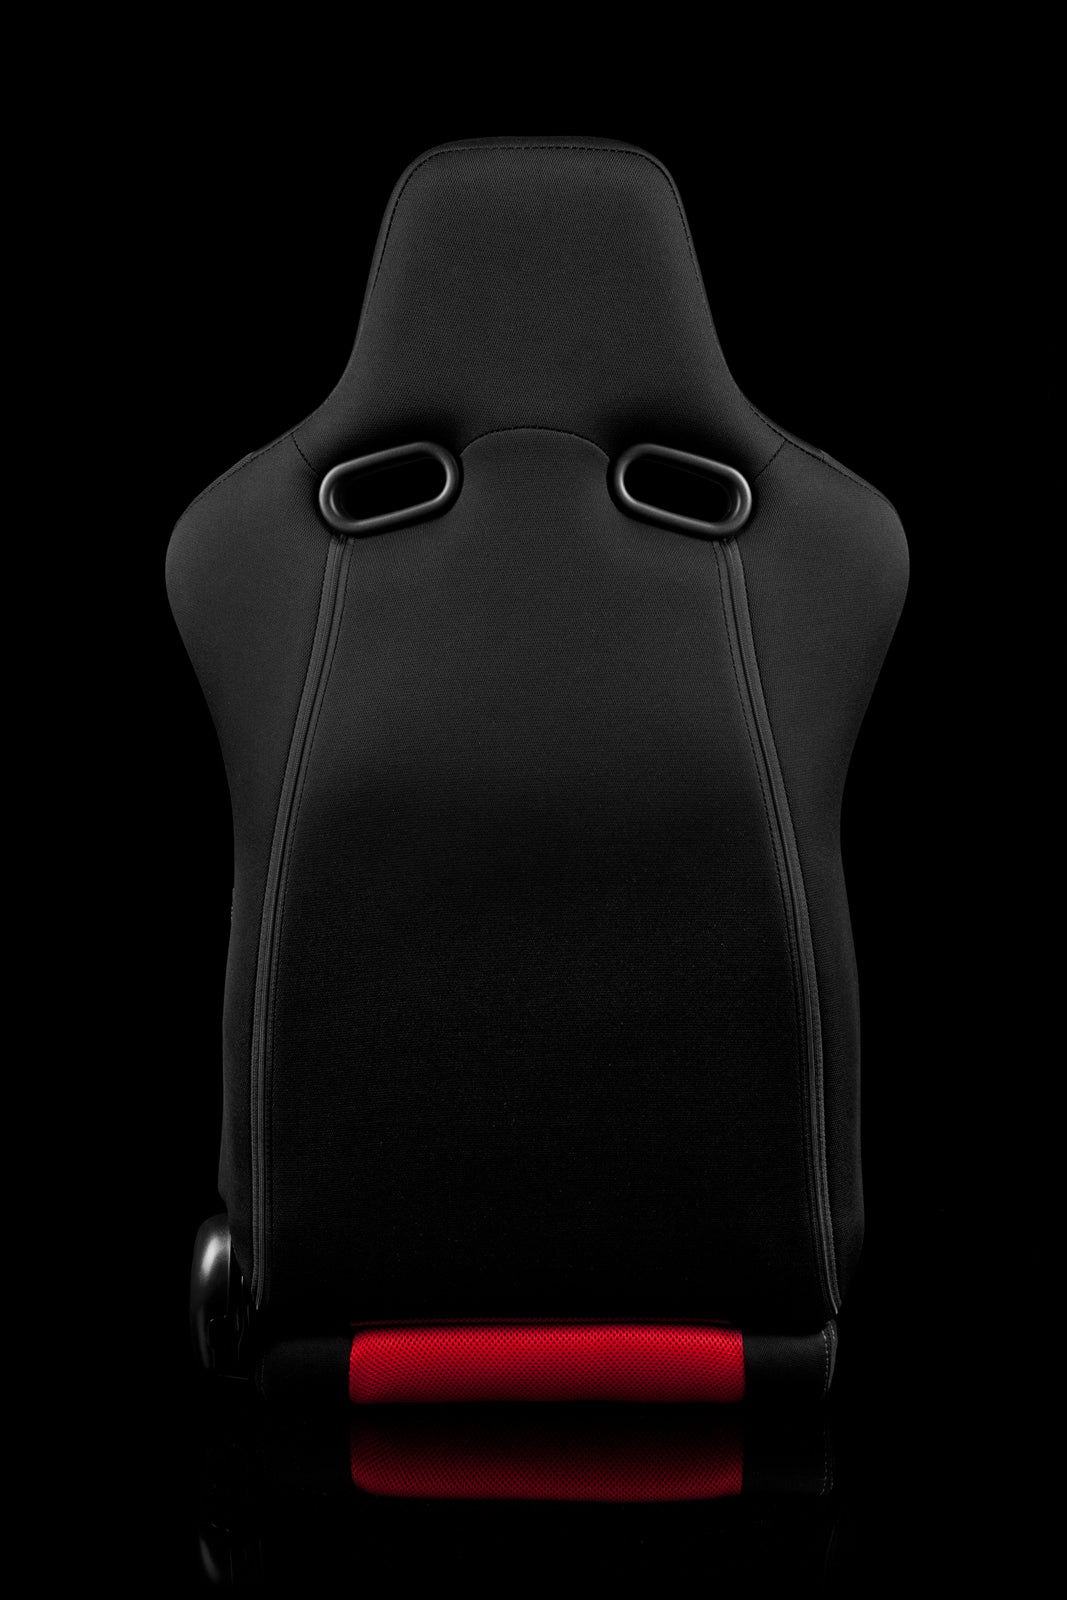 BRAUM Venom Series Racing Seats Black and Red (Pair) - Mafia Motorsports